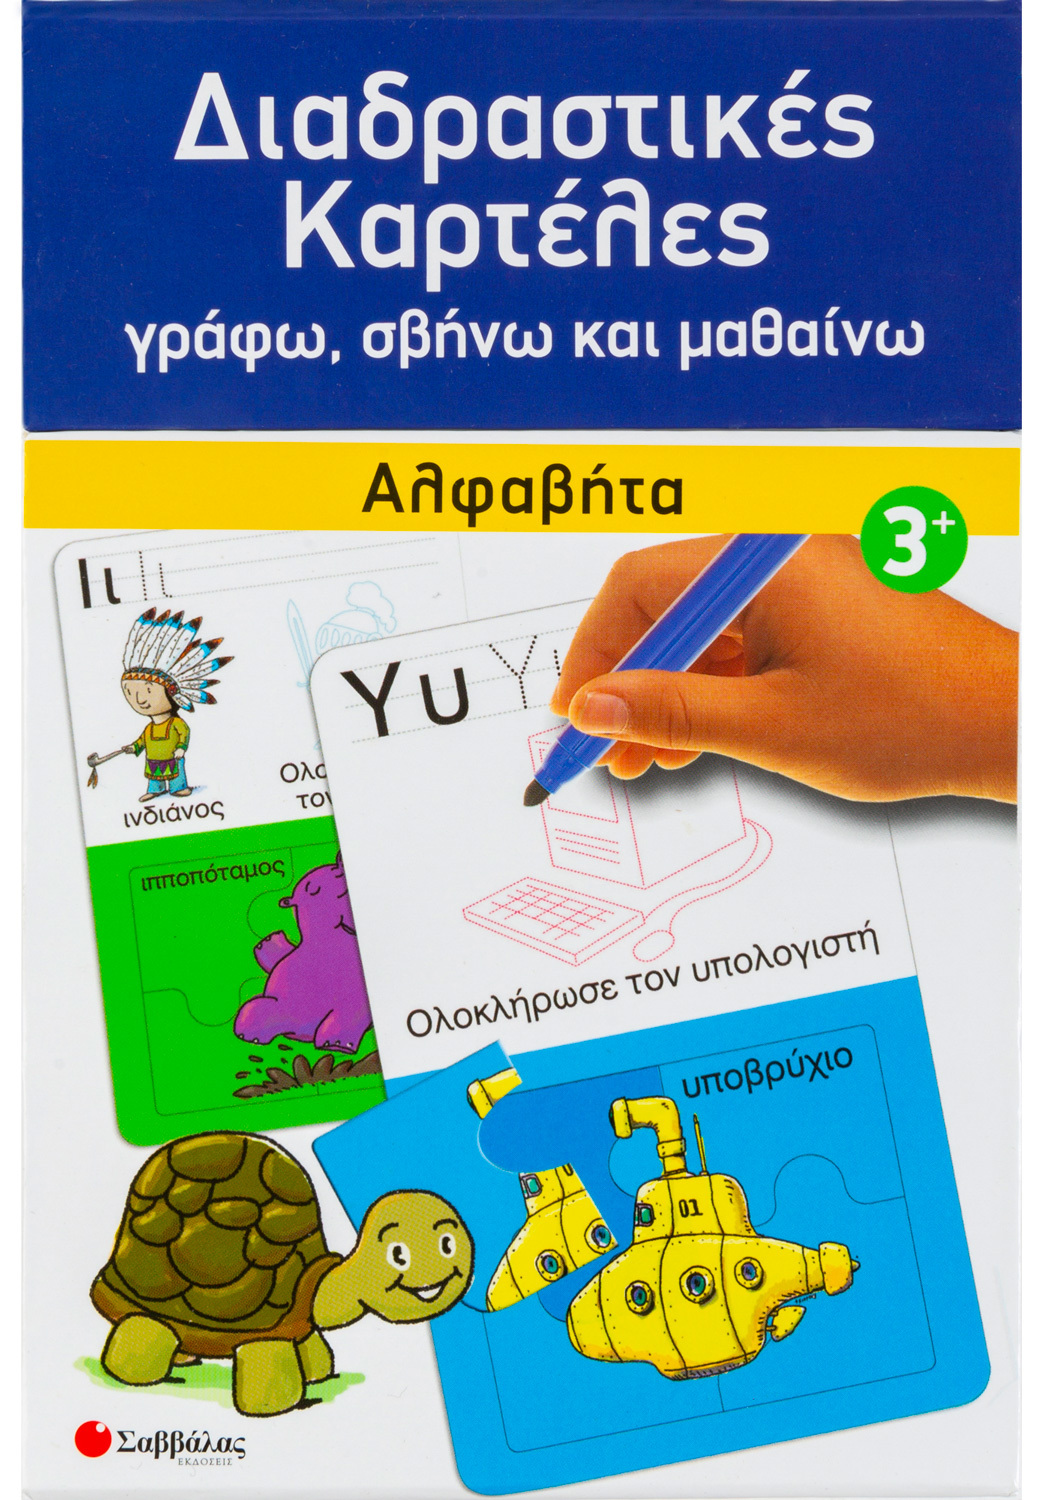 eblabla.gr βιβλιοχαρτοπωλείο